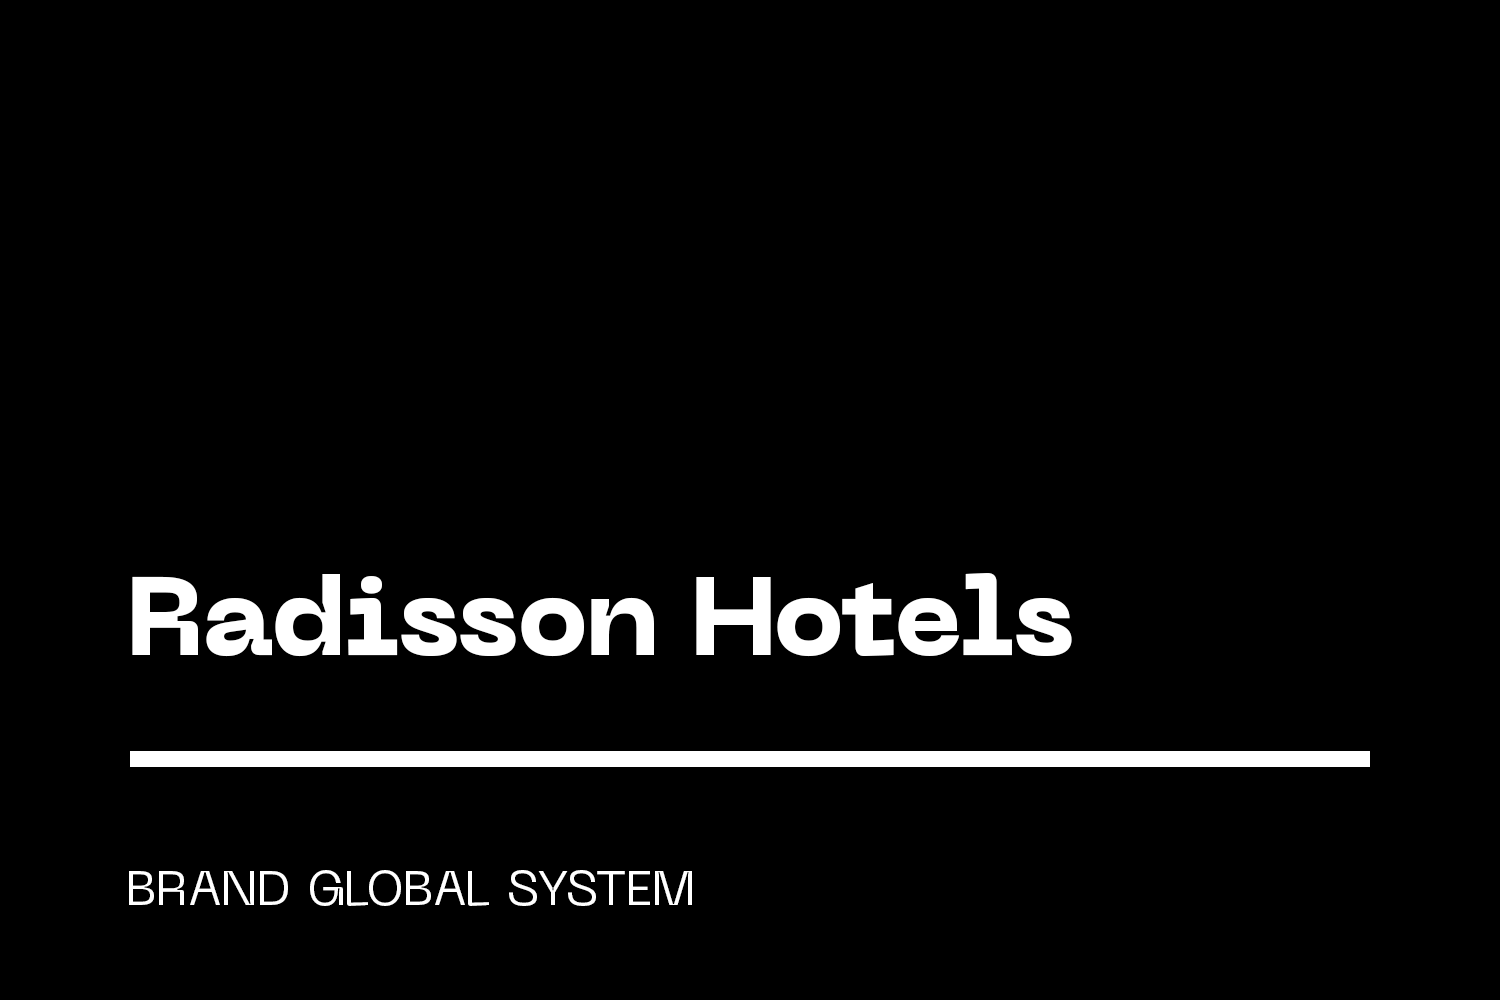 Brand global system — Radisson Hotels